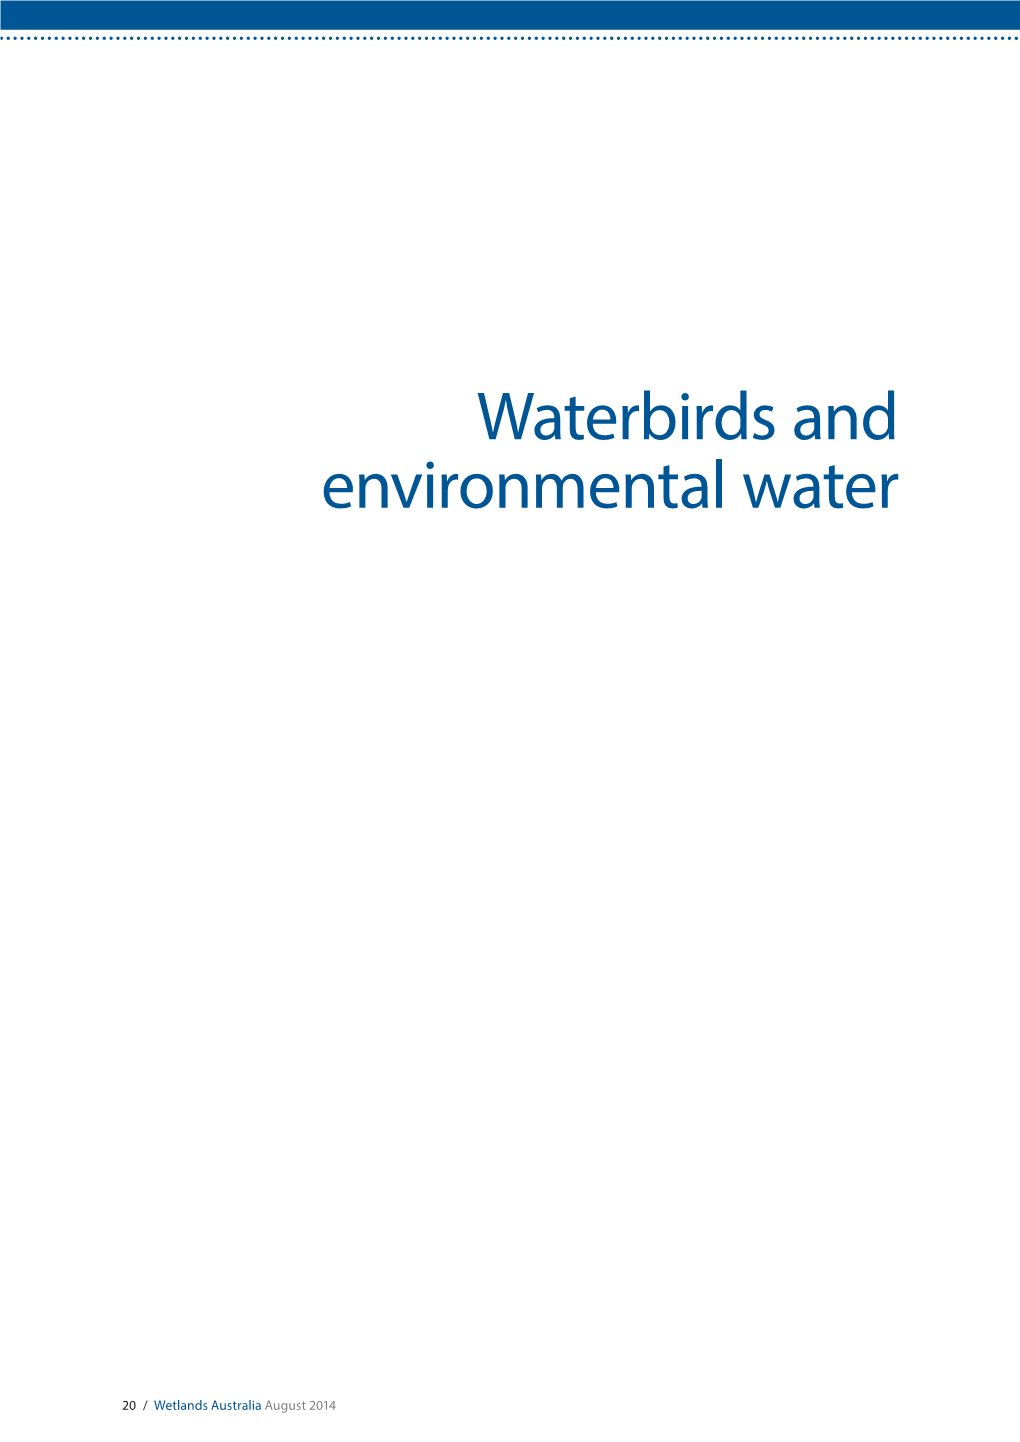 Wetlands Australia National Wetlands Update August 2014—Issue No 25